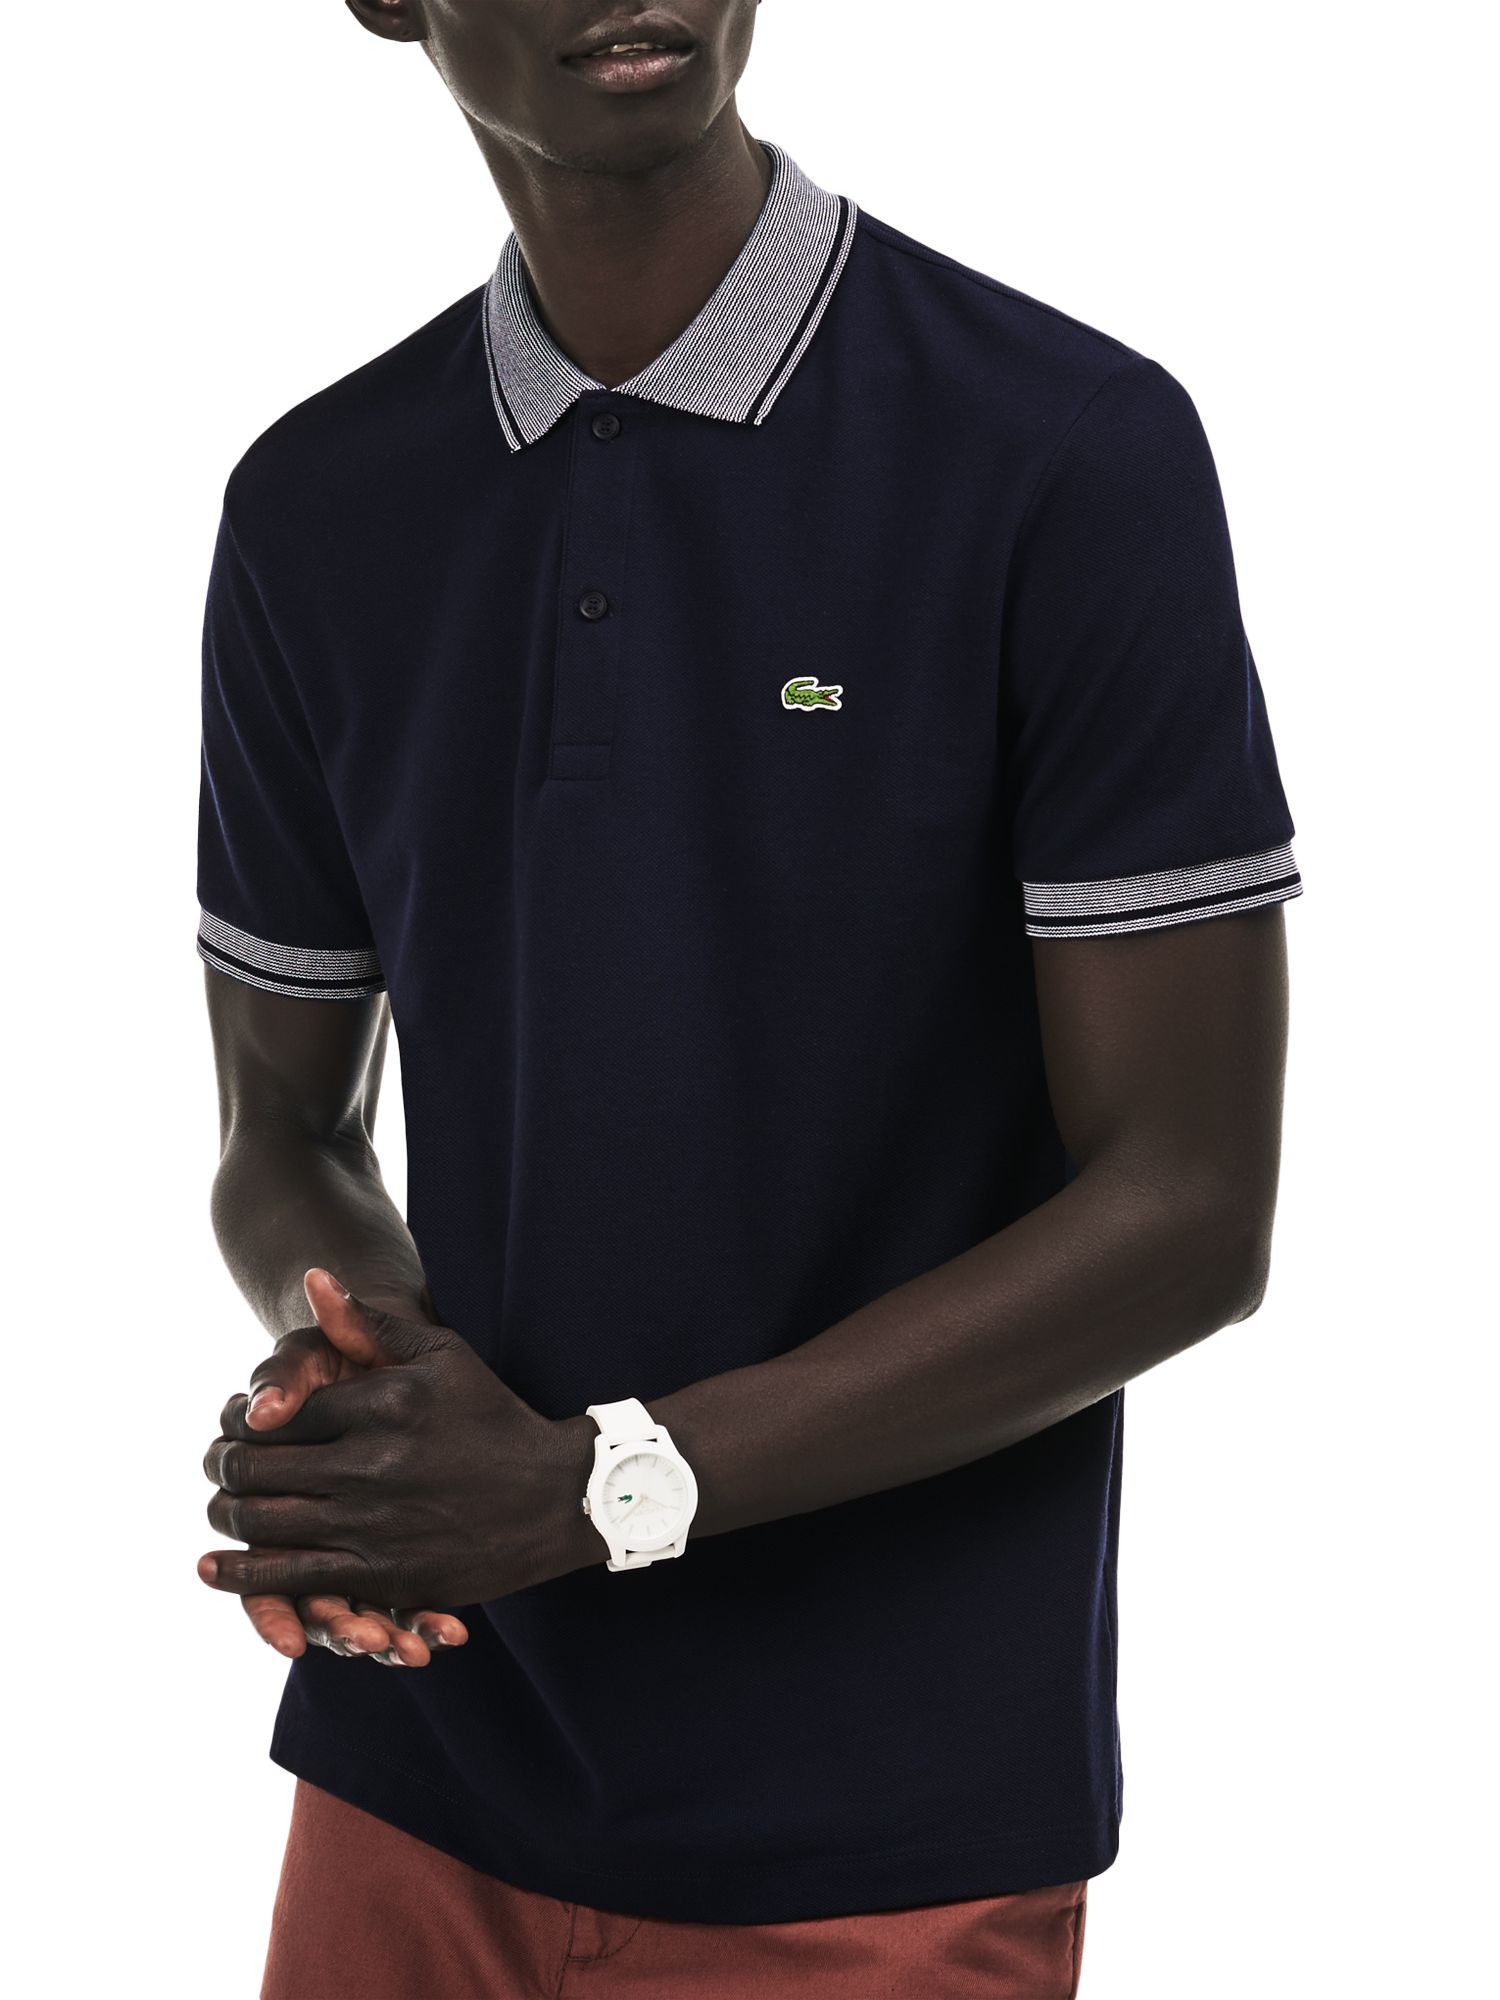 Lacoste Regular Fit Woven Collar Short Sleeve Polo Shirt, Navy/White, M